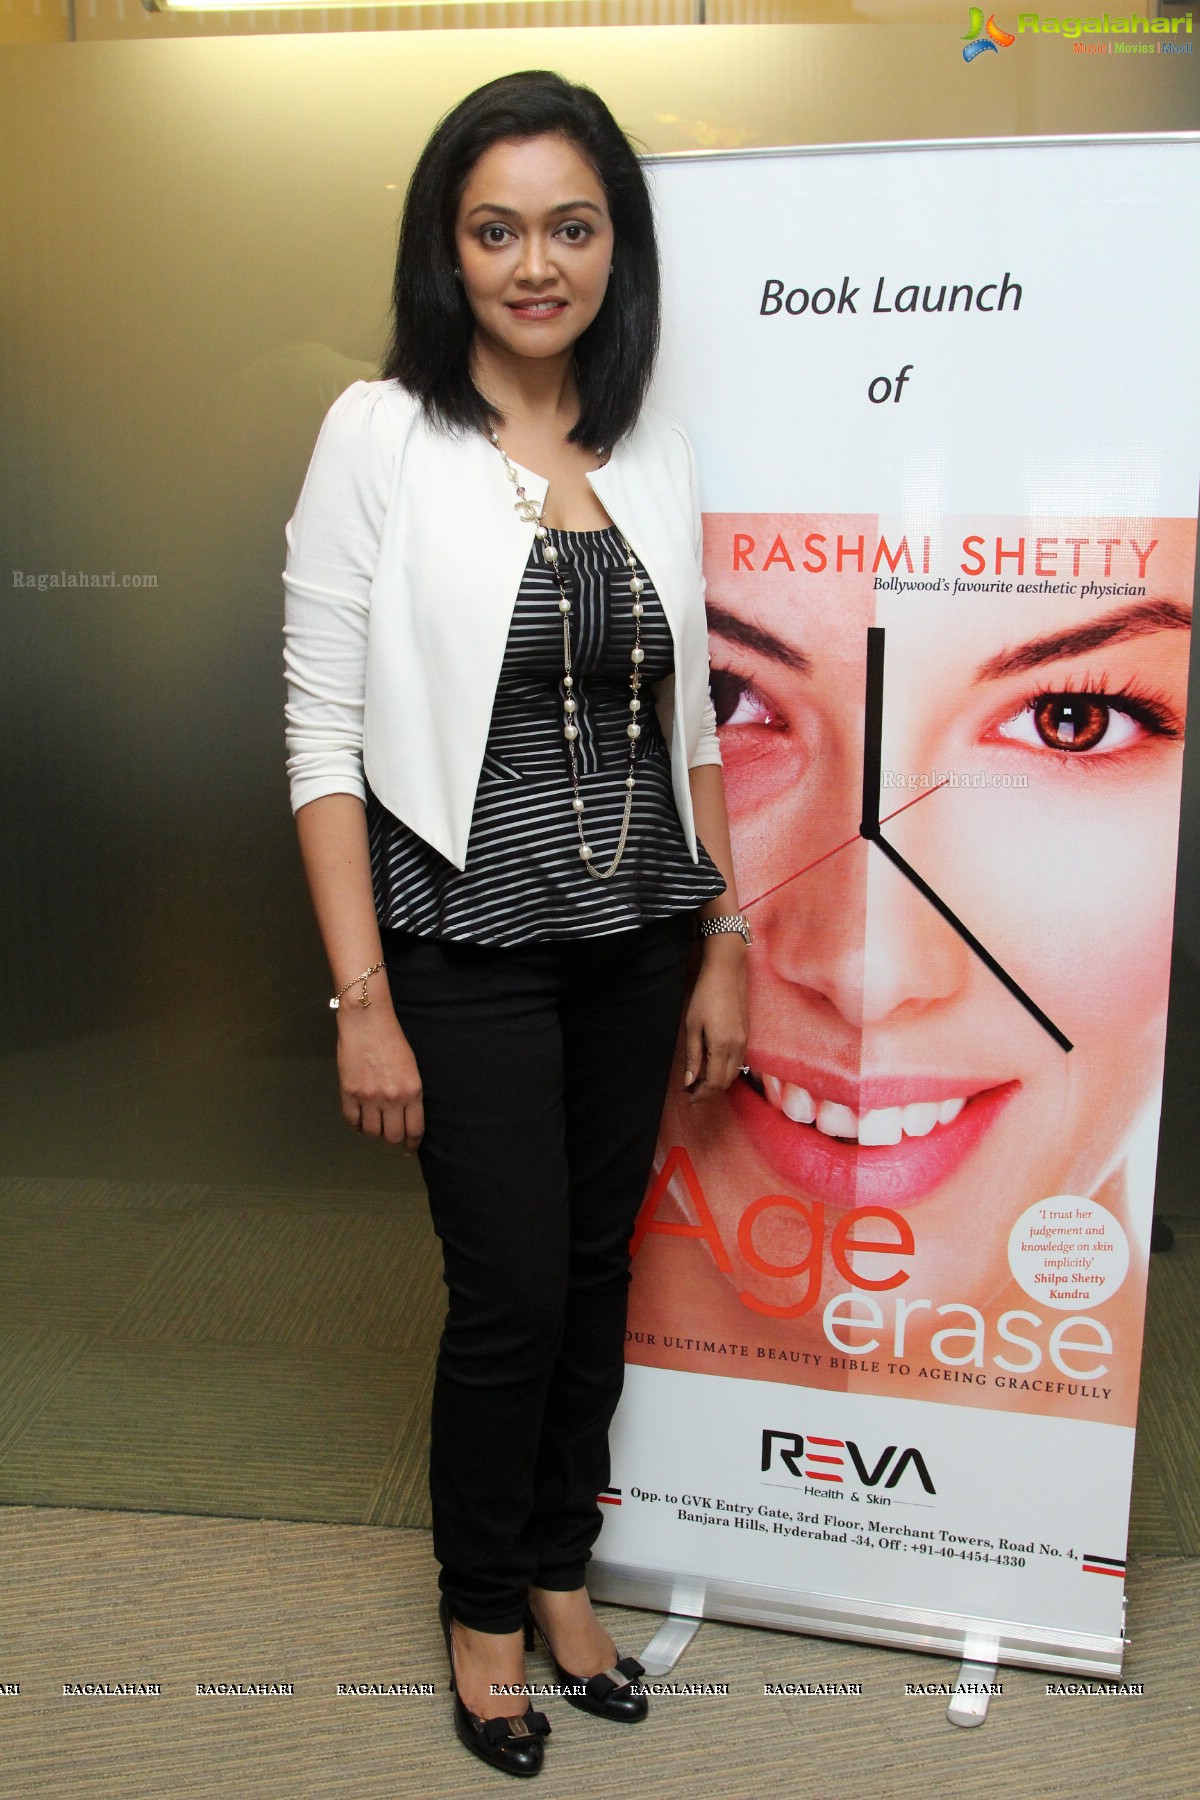 Dr Rashmi Shetty's Age Erase Book Launch in Hyderabad